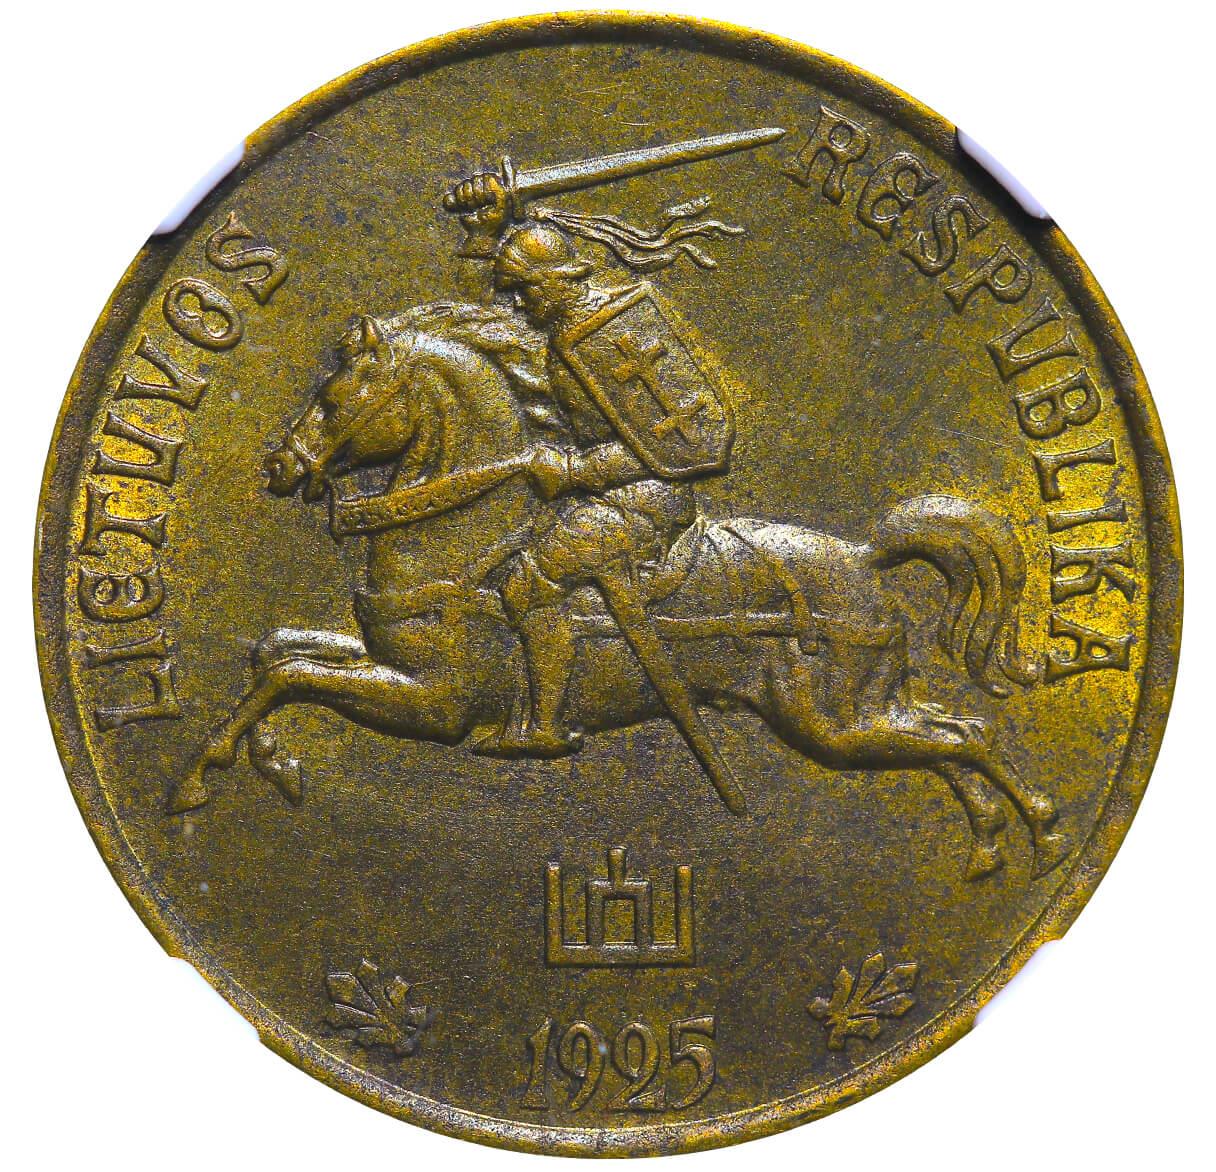 Lithuania, 50 Centu, 1925 year, NGC, MS 63 - Image 2 of 3